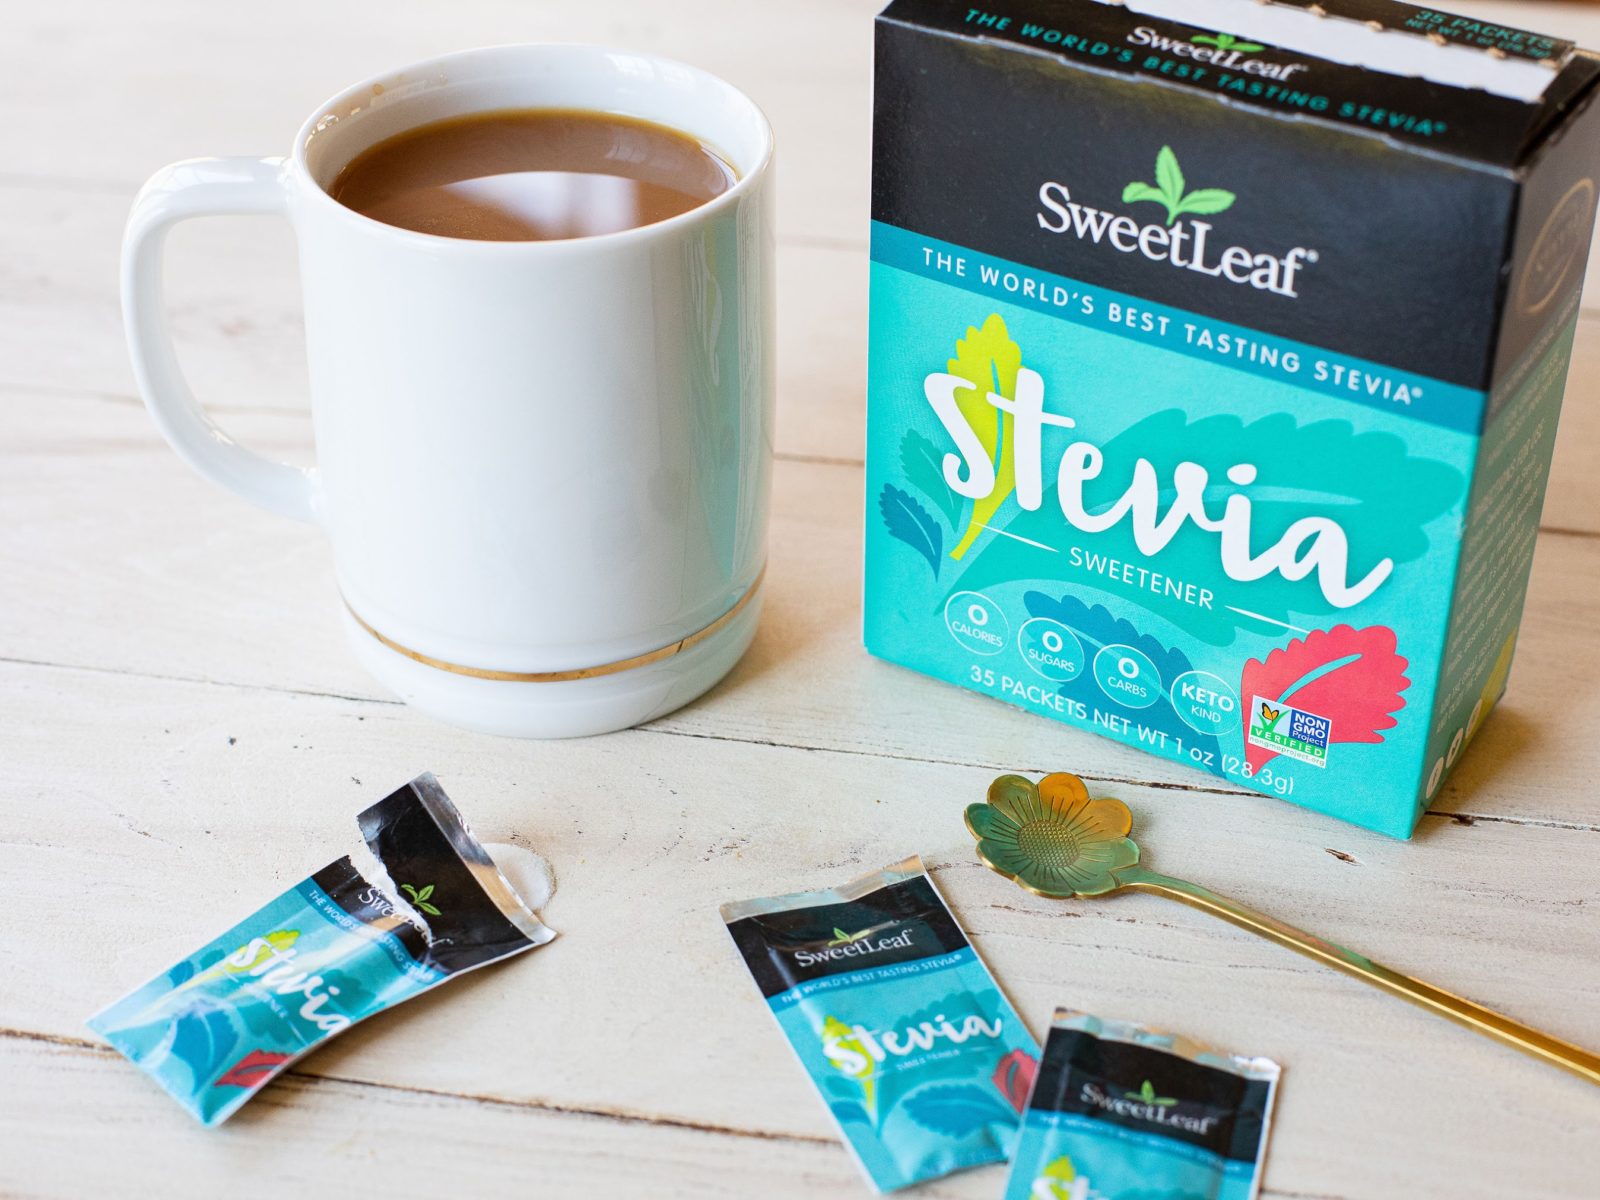 SweetLeaf Stevia Sweetener Packets Just $1.55 At Publix on I Heart Publix 3